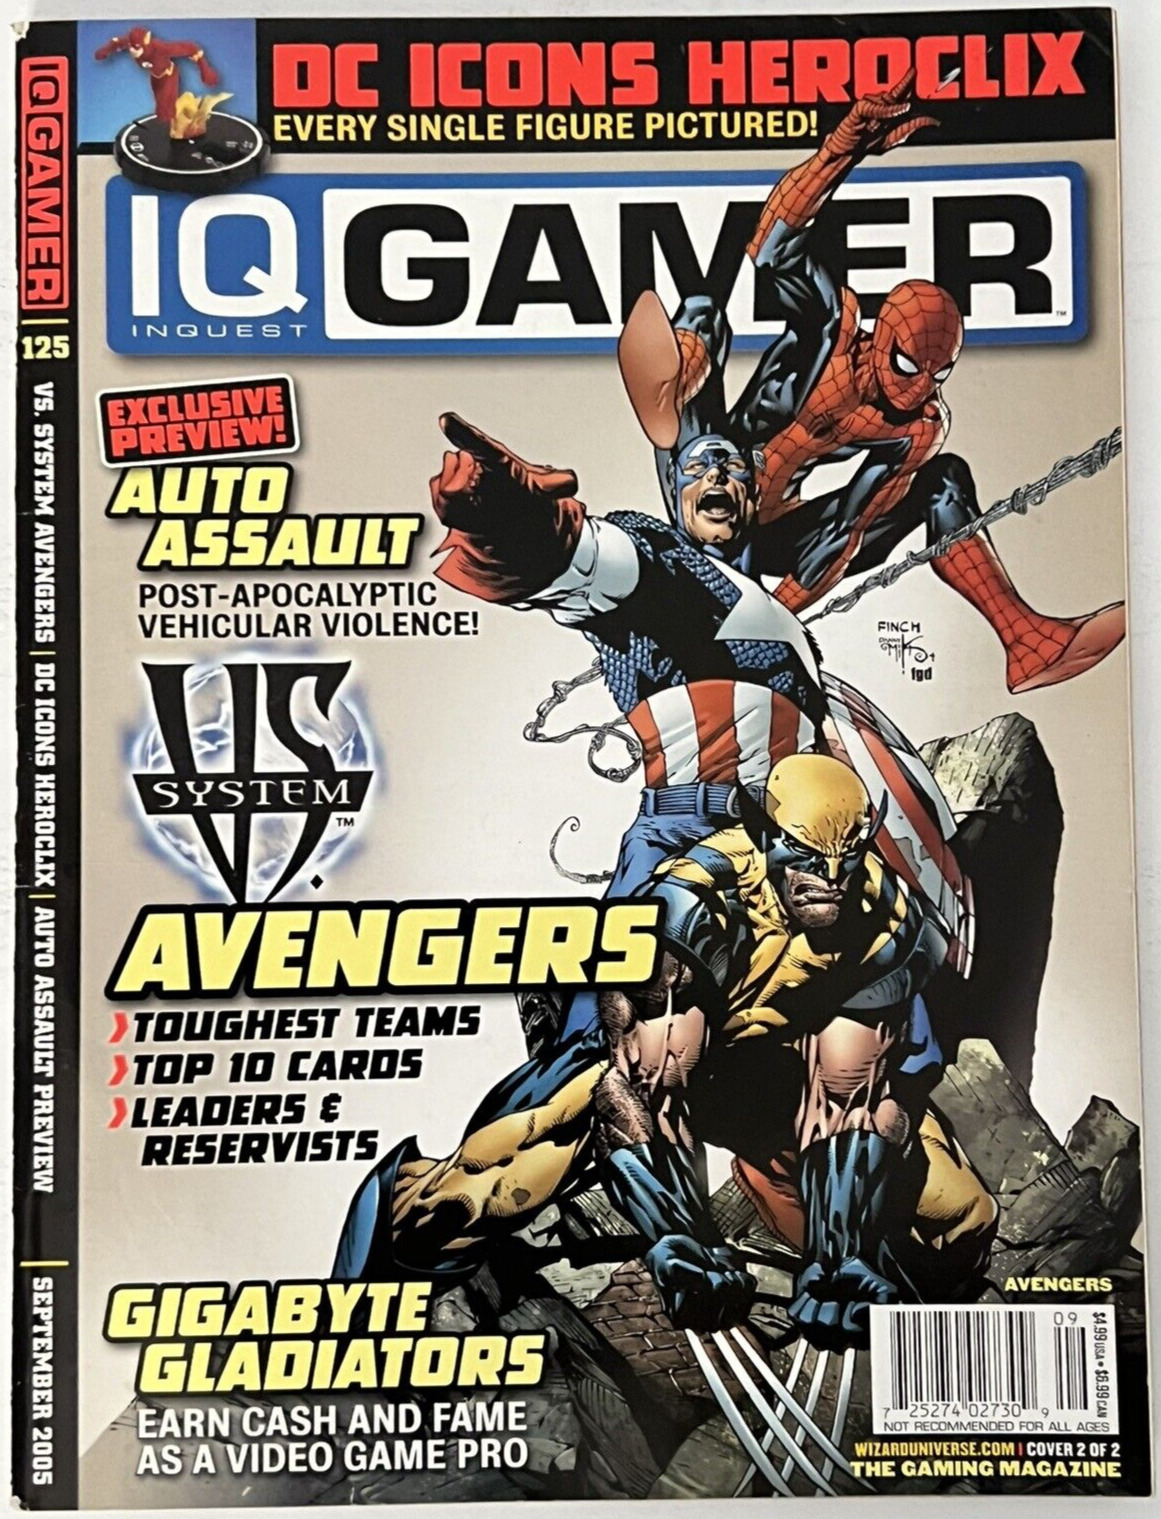 Inquest Gamer Magazine #125 Avengers Marvel DC HeroClix Magic September 2005